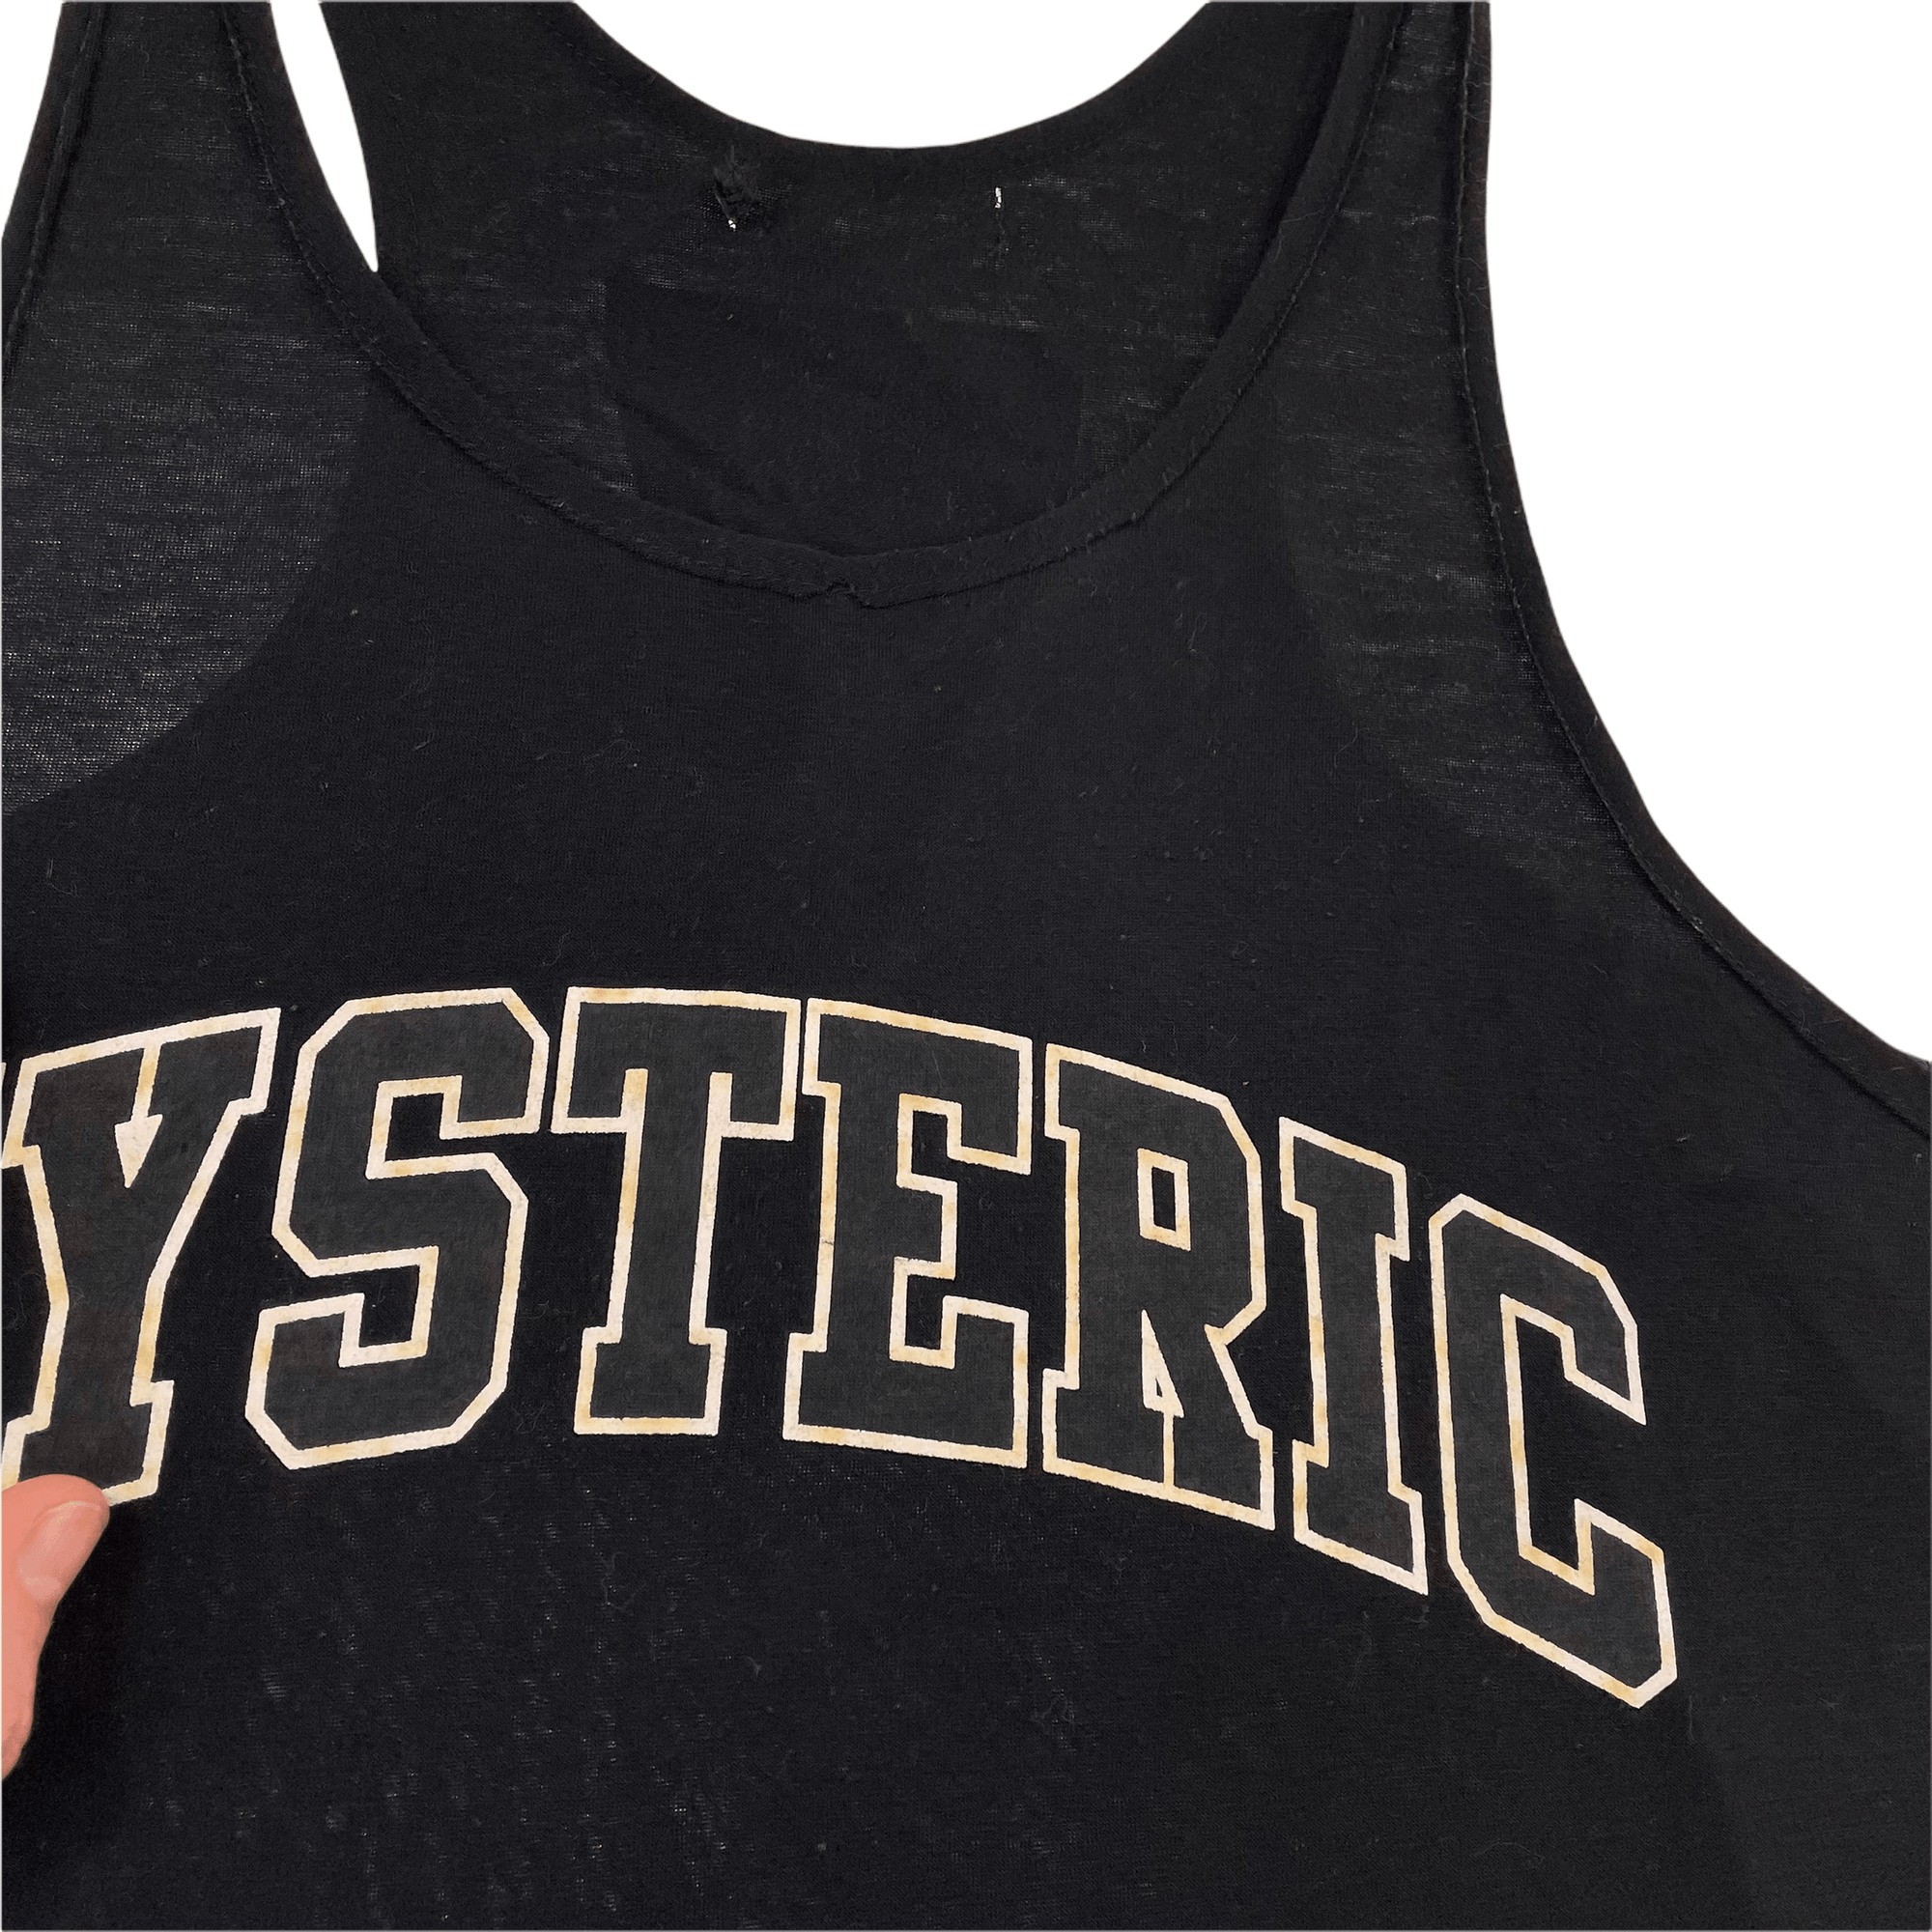 Vintage Hysteric Glamour vest size S - second wave vintage store